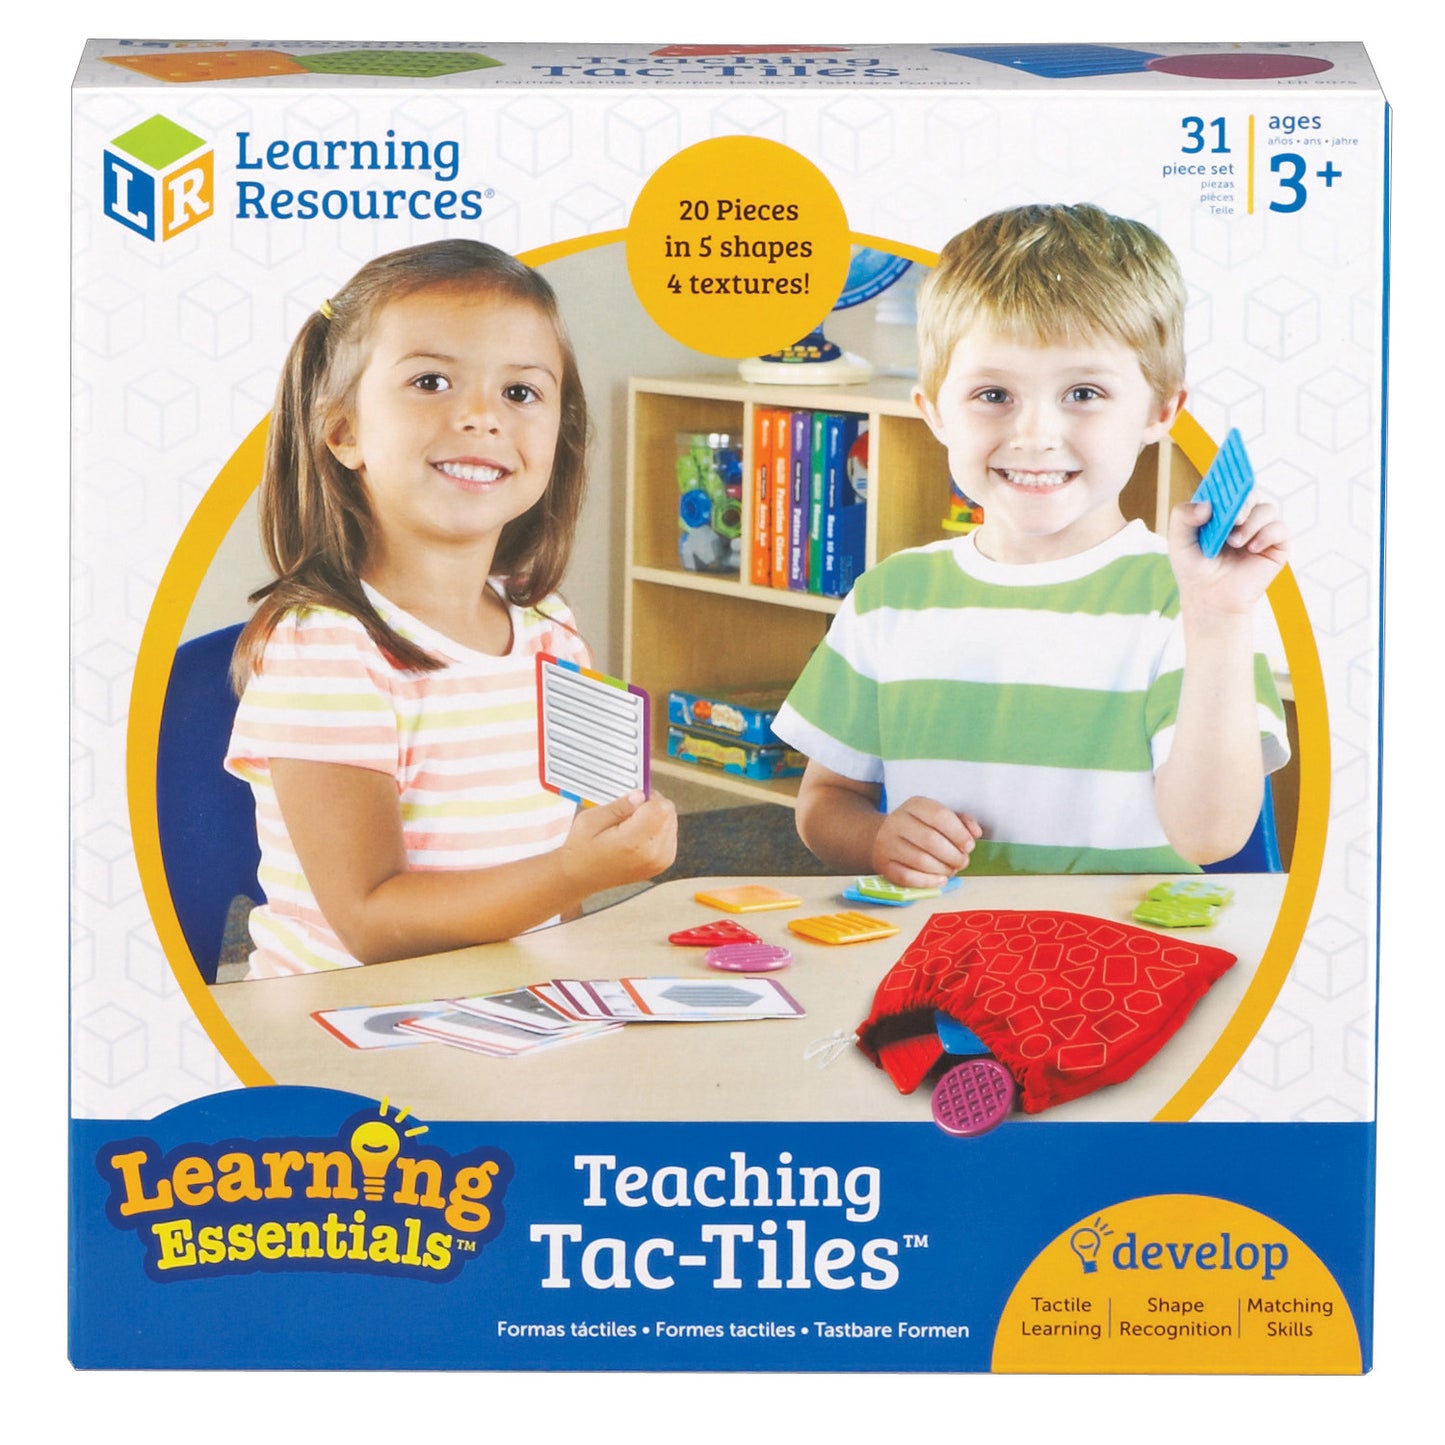 Teaching Tac-Tiles™